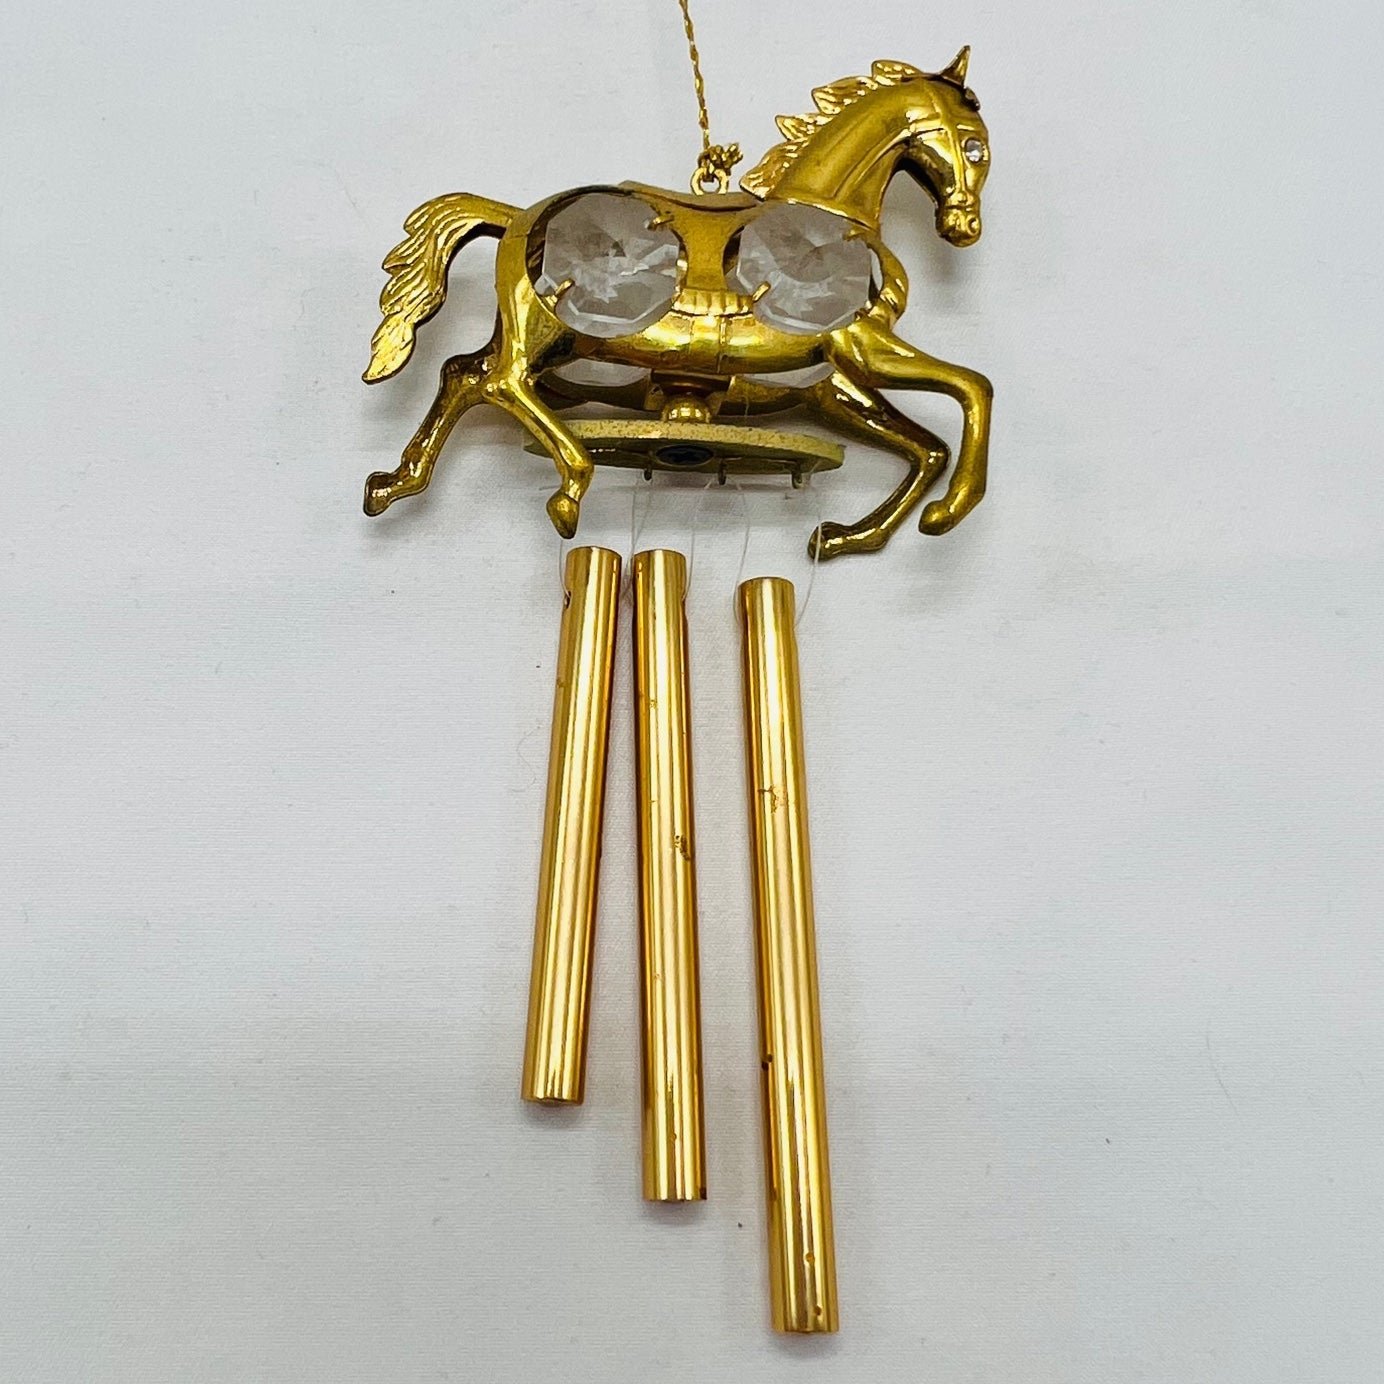 Vintage Brass Miniature Horse Wind Chime qNFyZWi7t